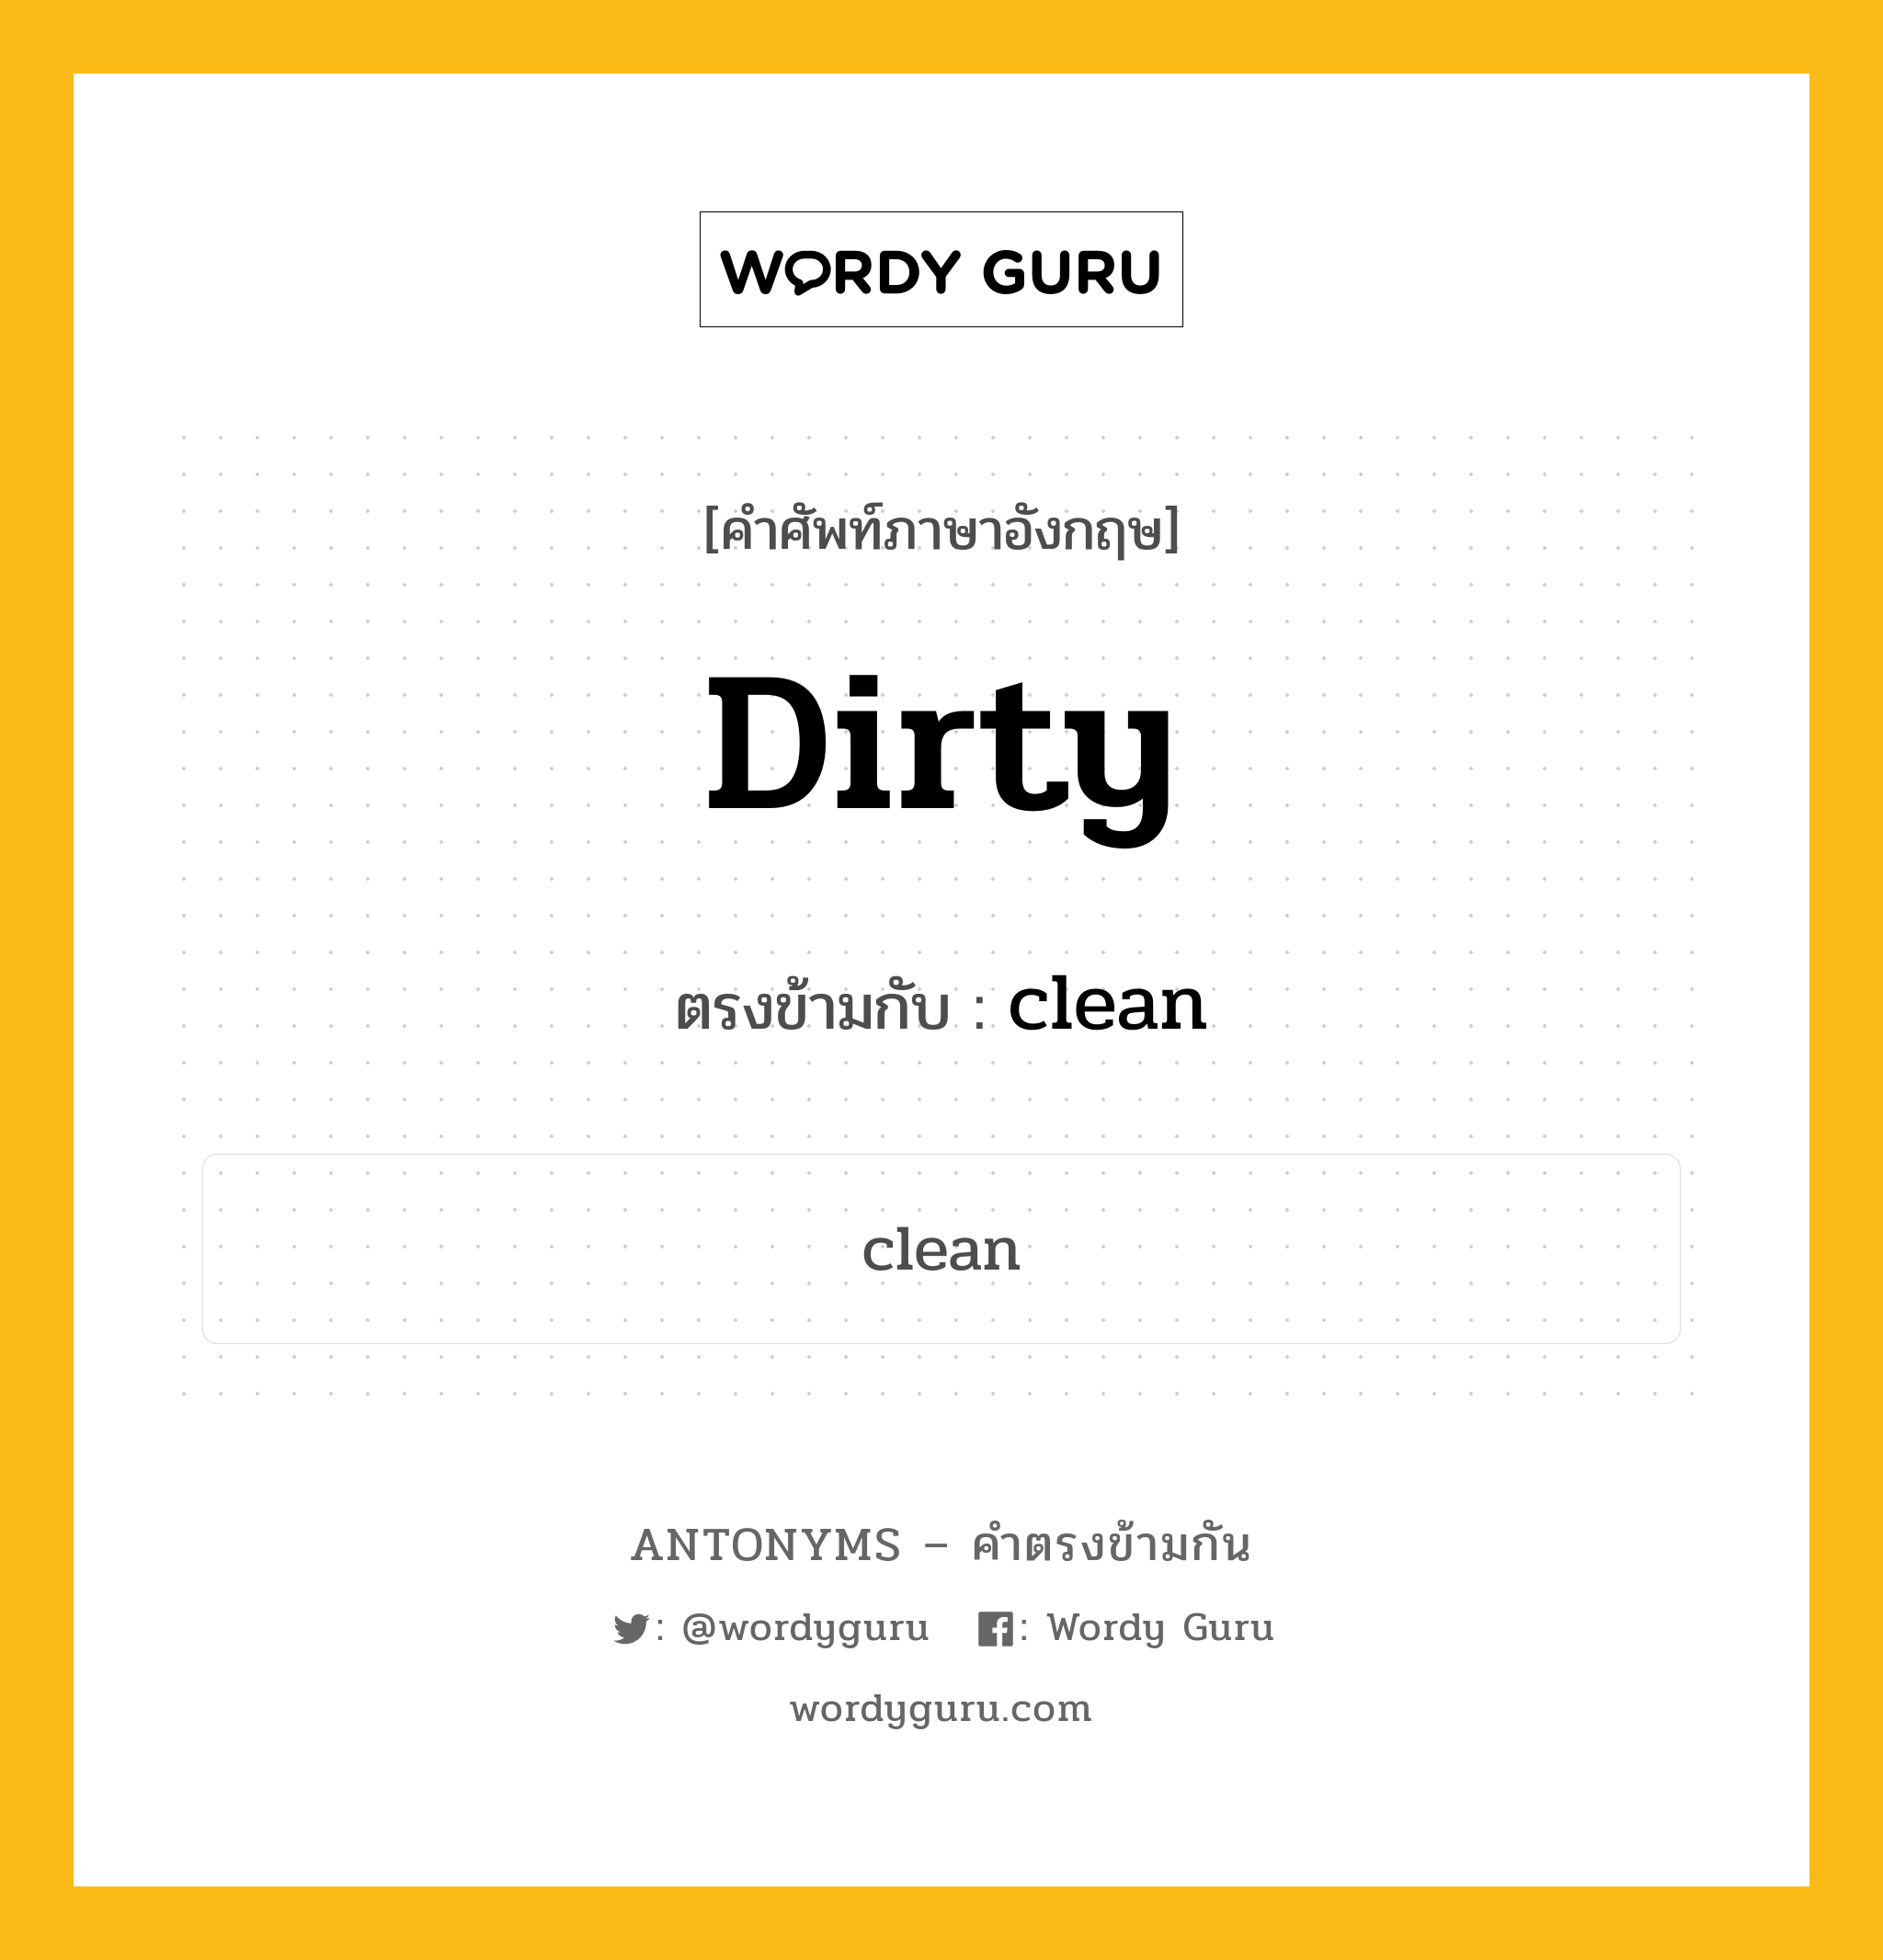 dirty เป็นคำตรงข้ามกับคำไหนบ้าง?, คำศัพท์ภาษาอังกฤษ dirty ตรงข้ามกับ clean หมวด clean